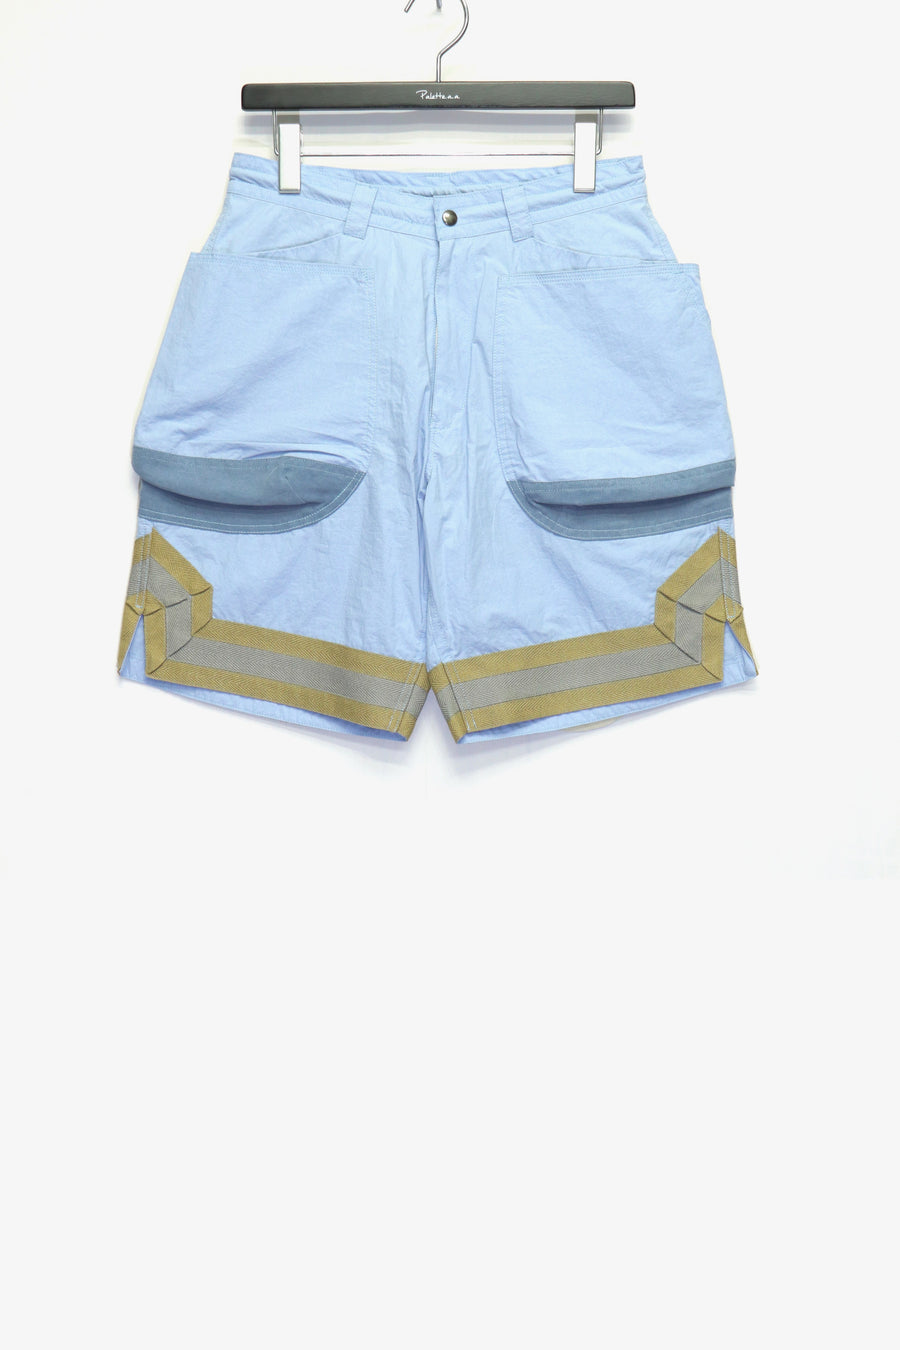 LEH  Great Variety Pocket Shorts